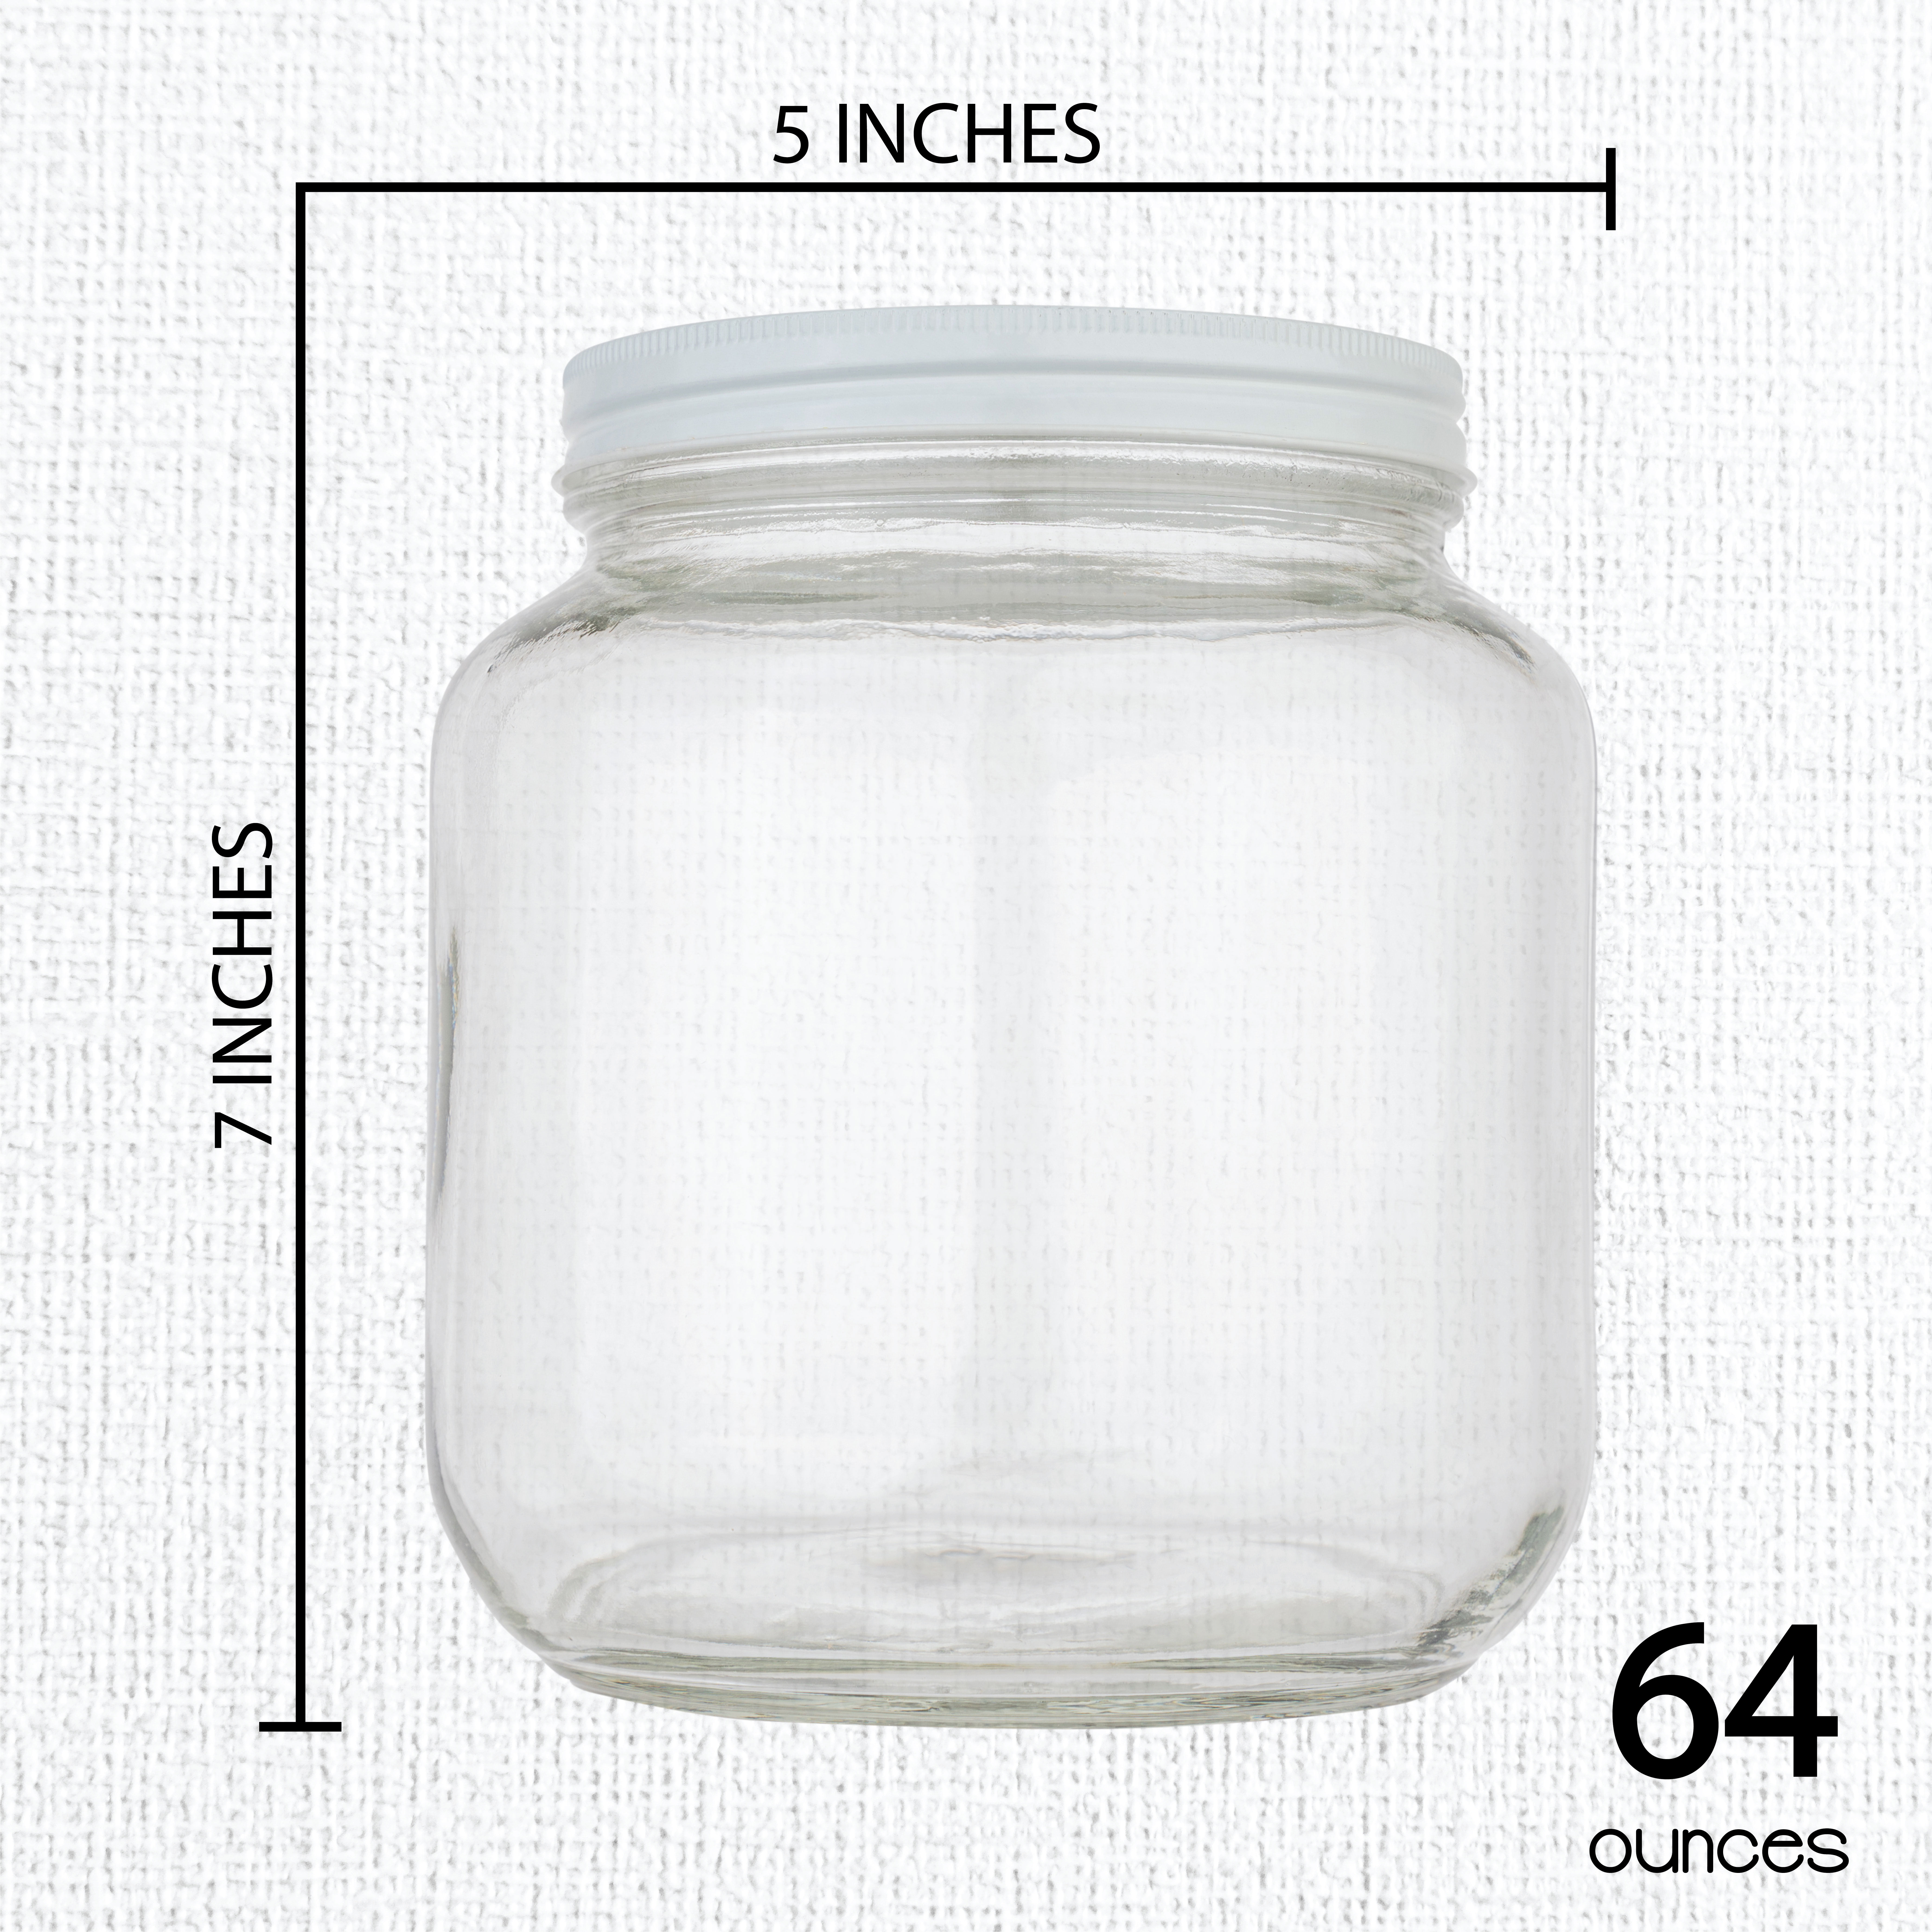 Eleganttime 64 oz Mason Jar Wide Mouth 3 Pack,Large Half Gallon Mason Jar with Airtight Lid,Big 1/2 Gallon Big Mason Jars for Canning,Pickling